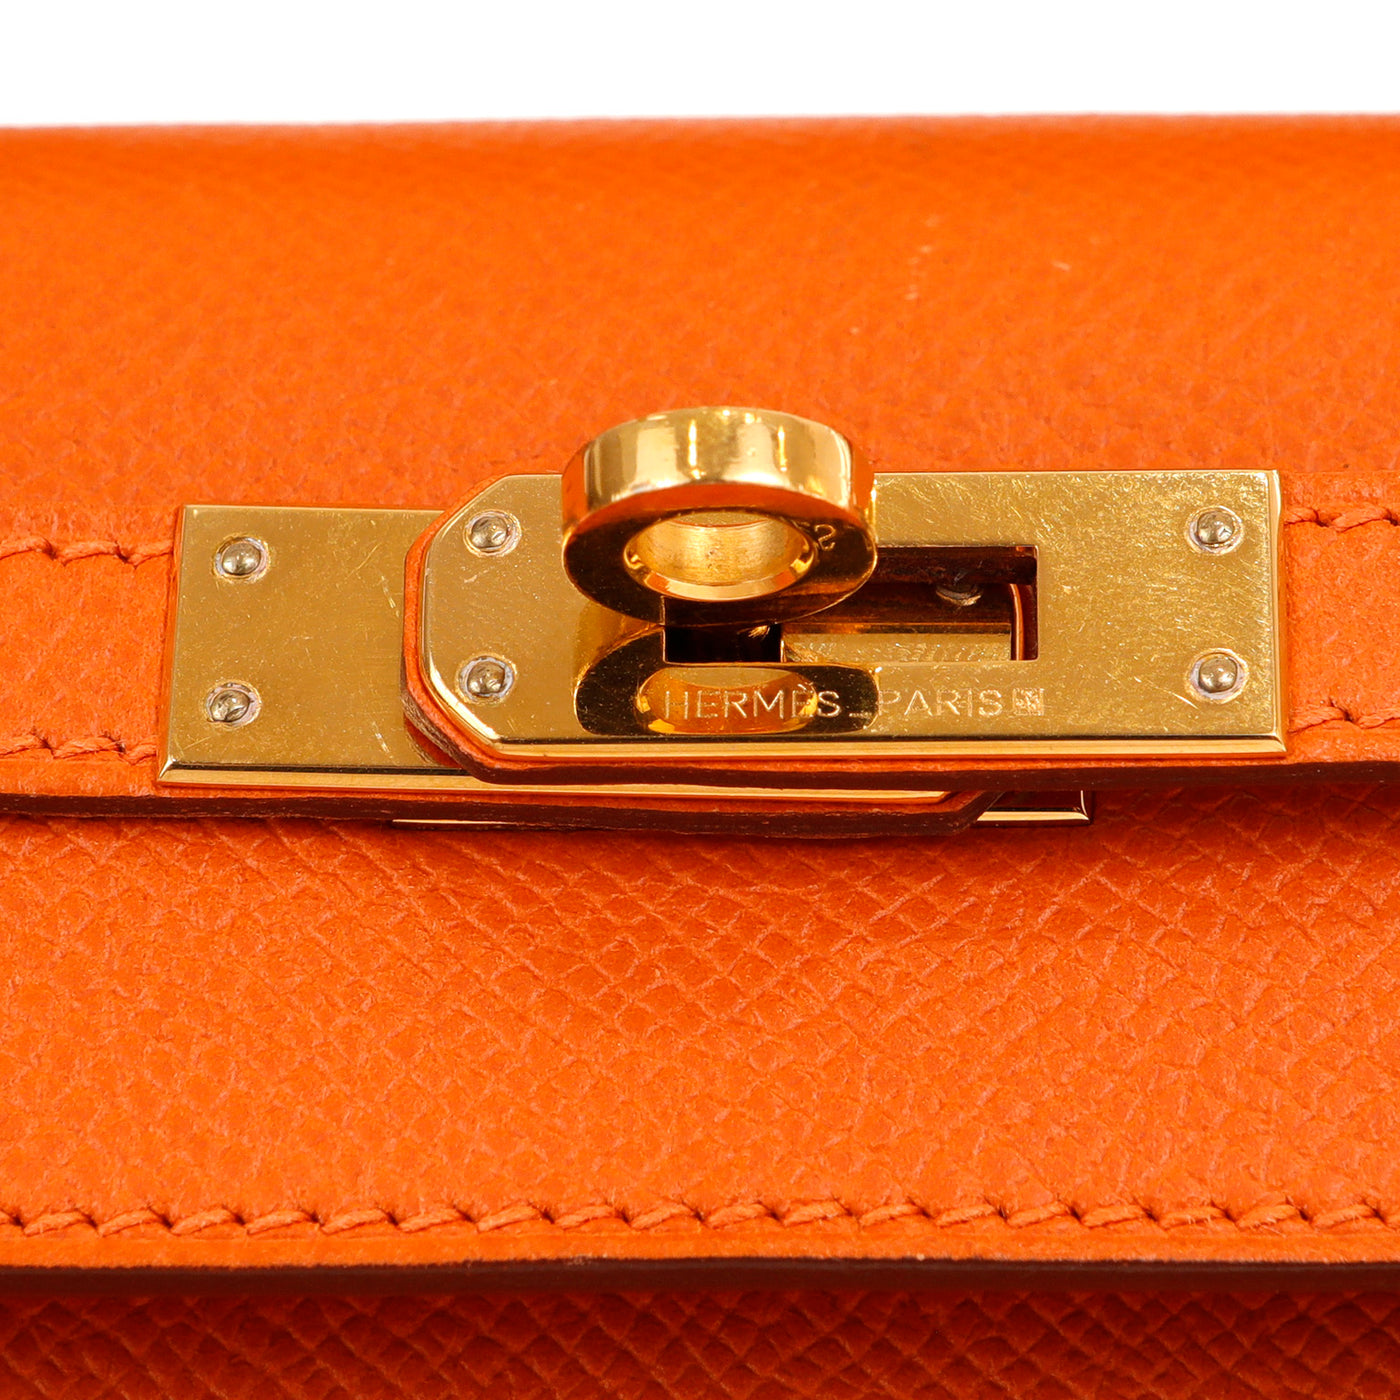 Sold at Auction: Hermes Kelly Pochette Clutch, Feu Orange Epsom